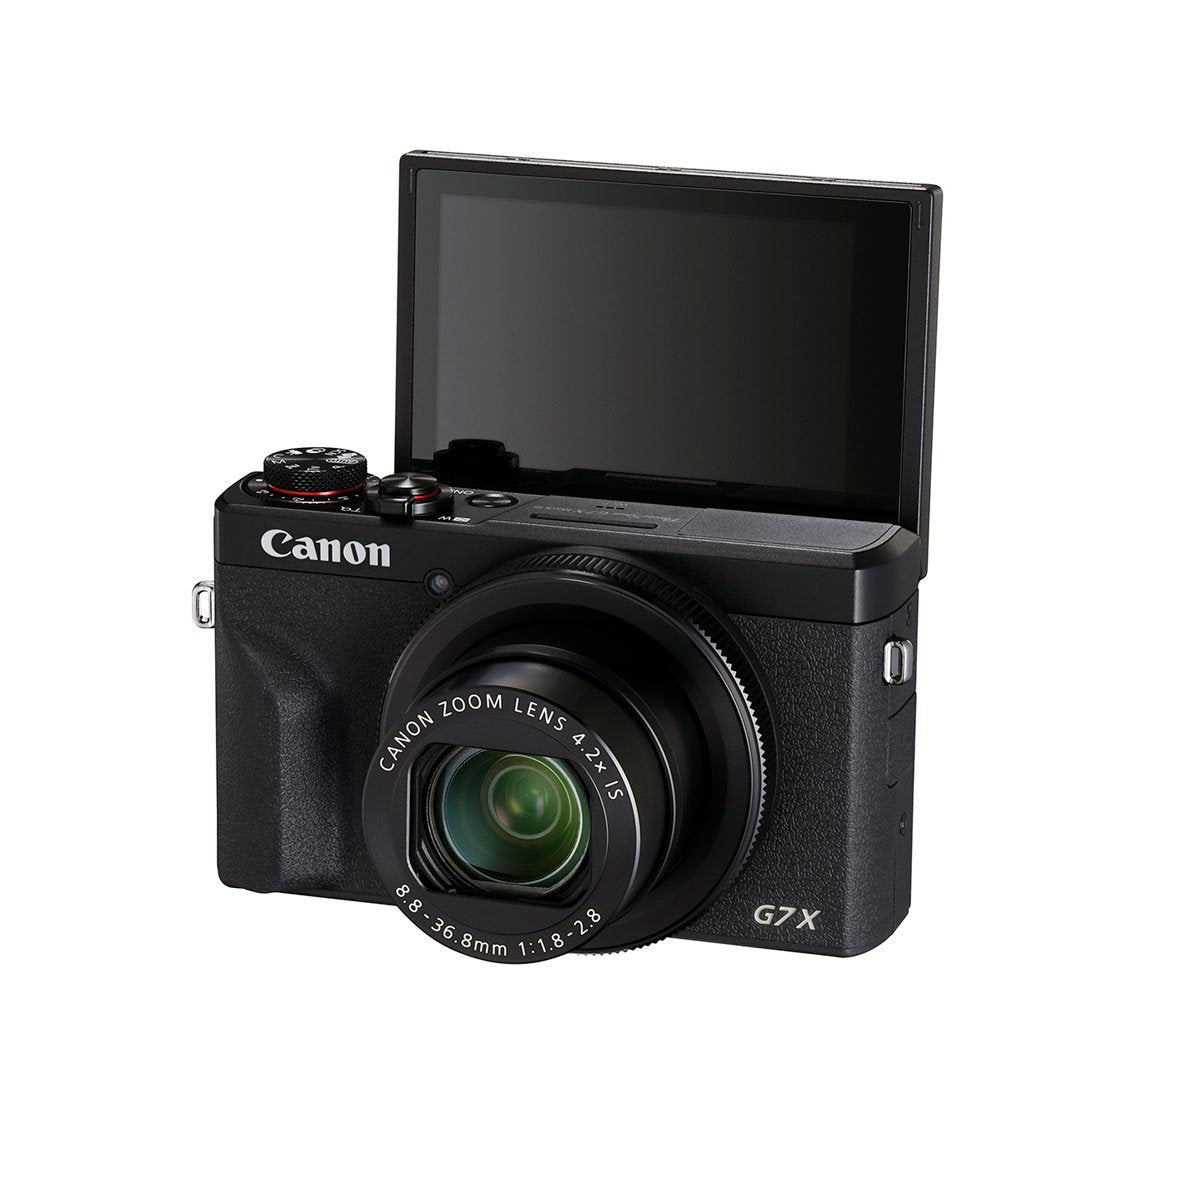 Canon Powershot G7X Mark III Video Creator Kit